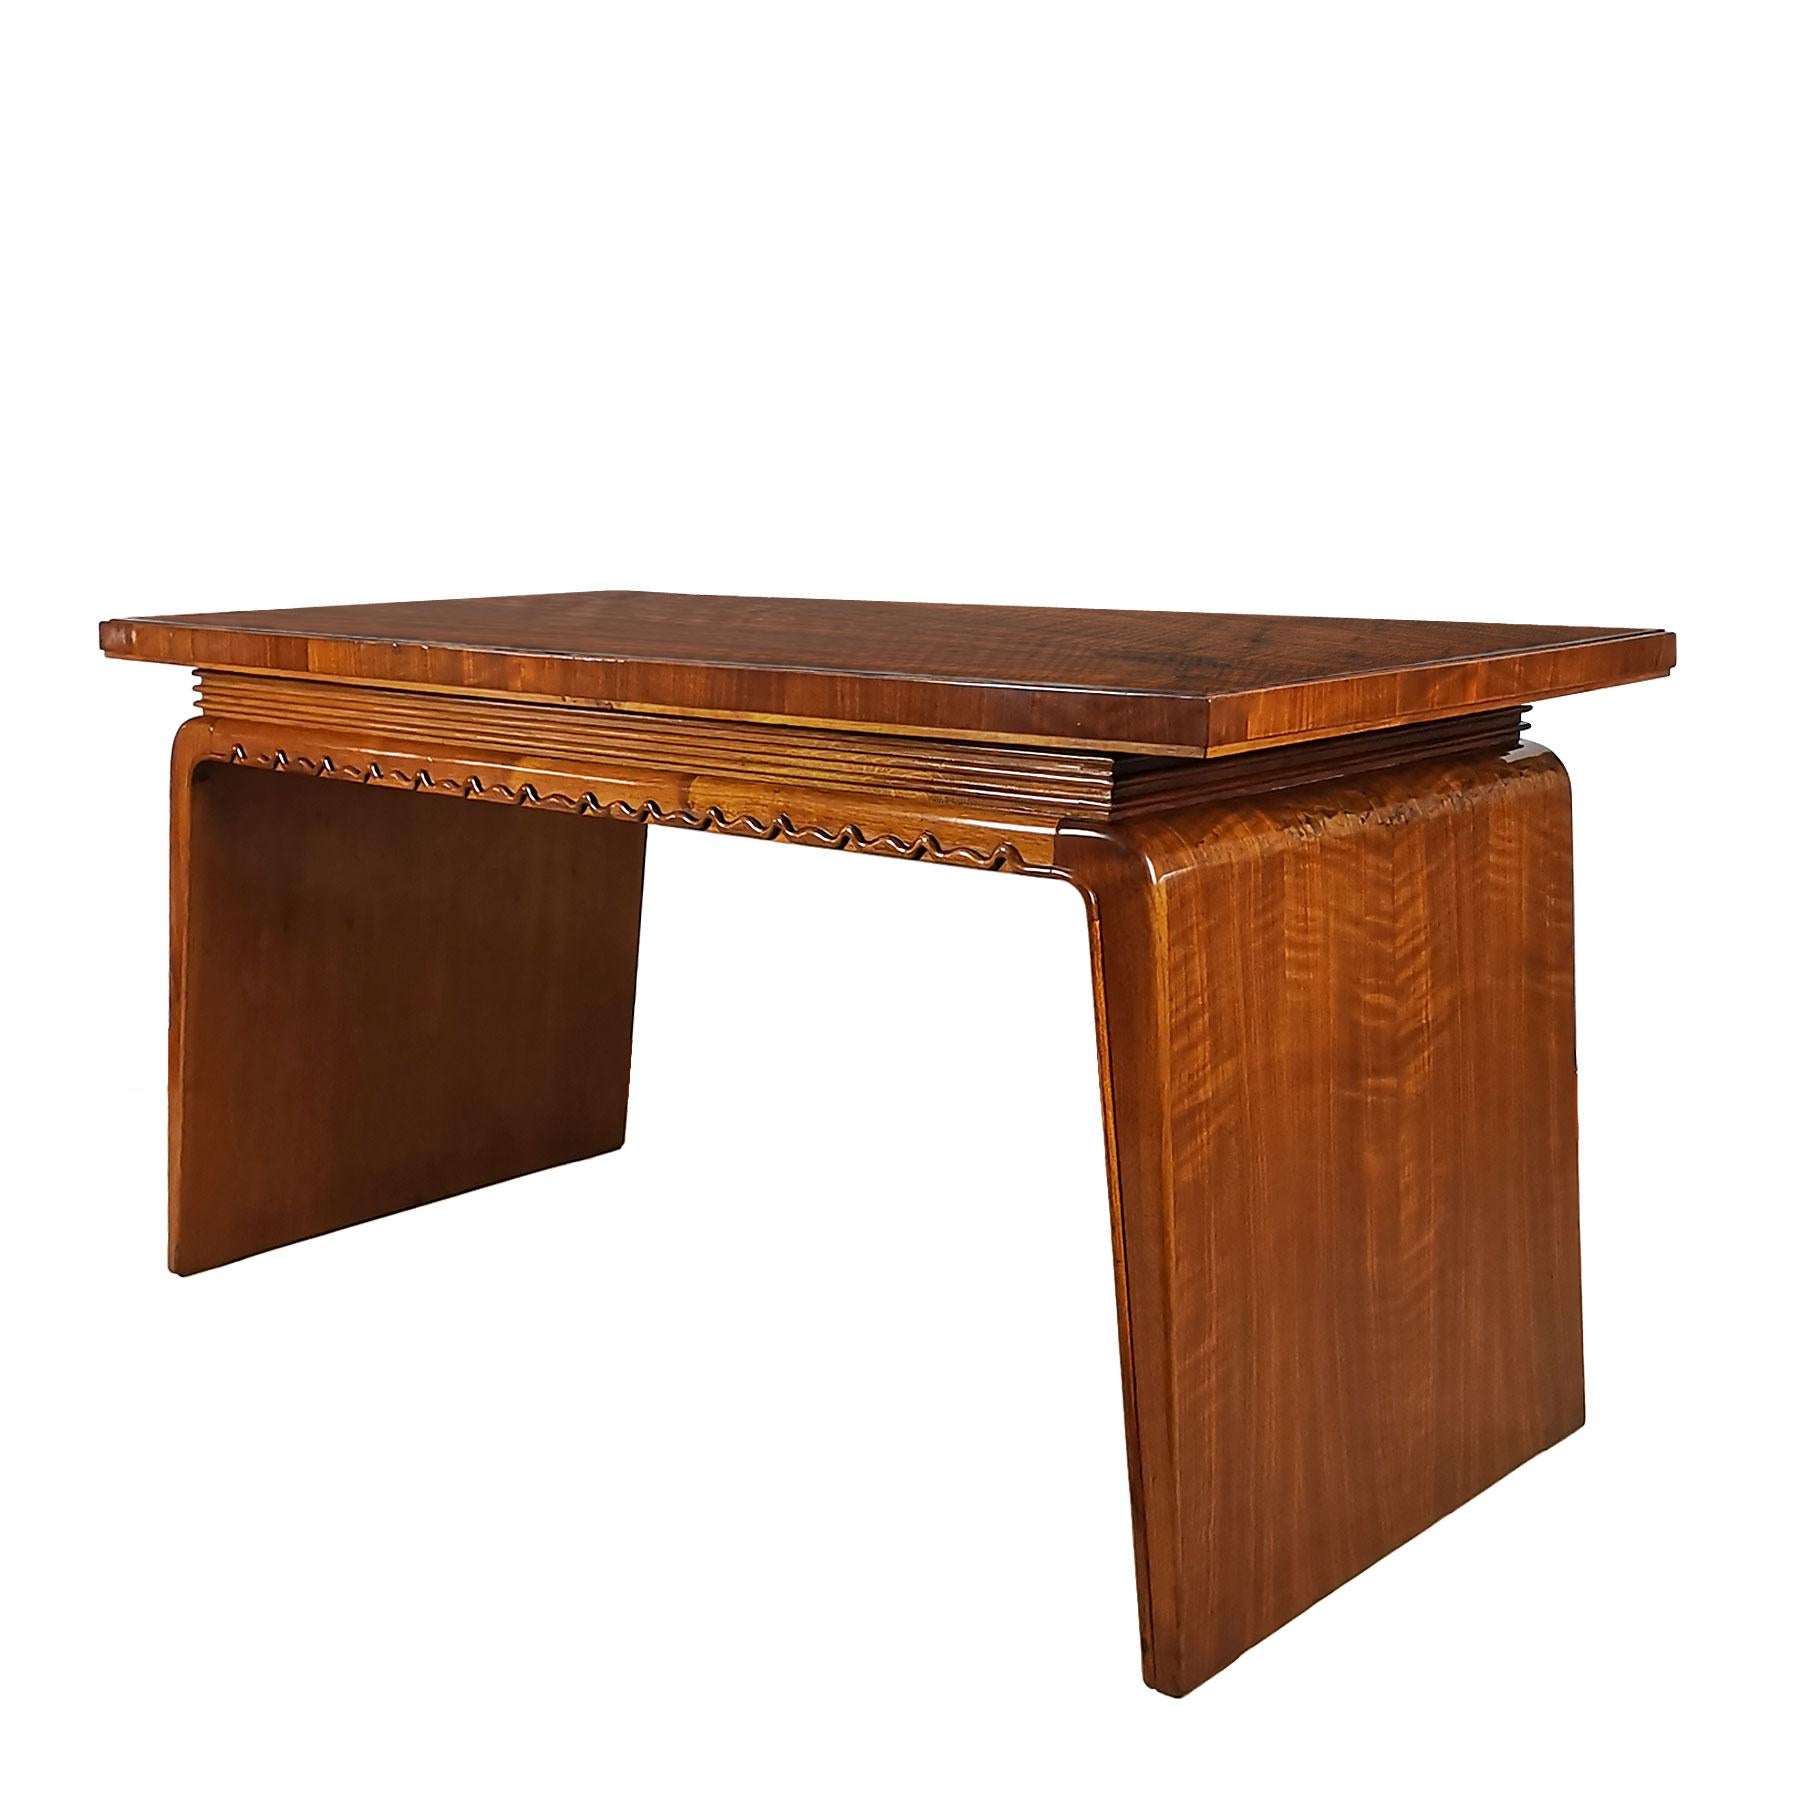 1930s Art Deco Flat Desk, One-Drawer, Beech, Walnut, Japanese Inspired, Italy 1